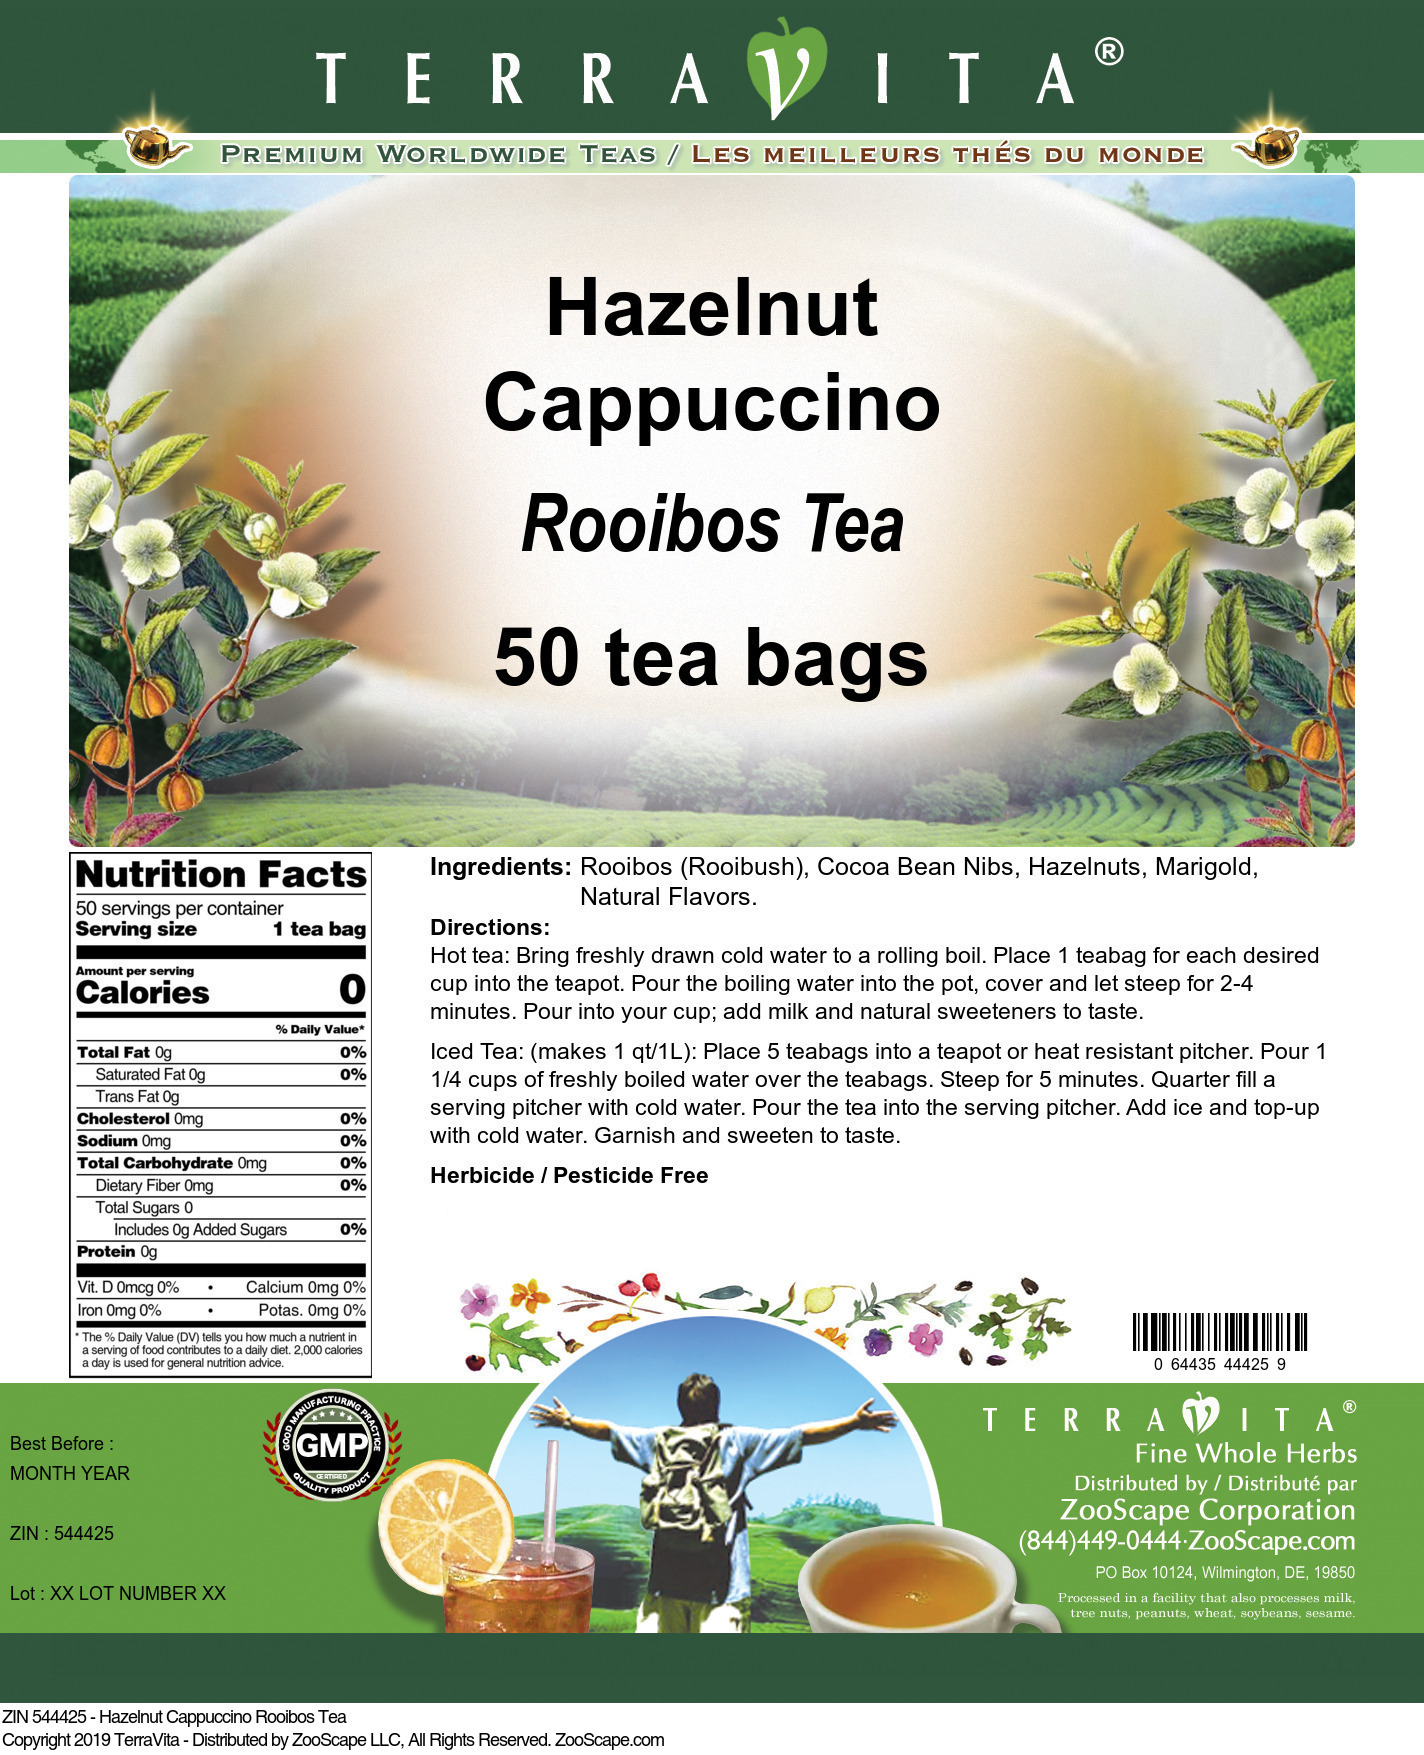 Hazelnut Cappuccino Rooibos Tea - Label